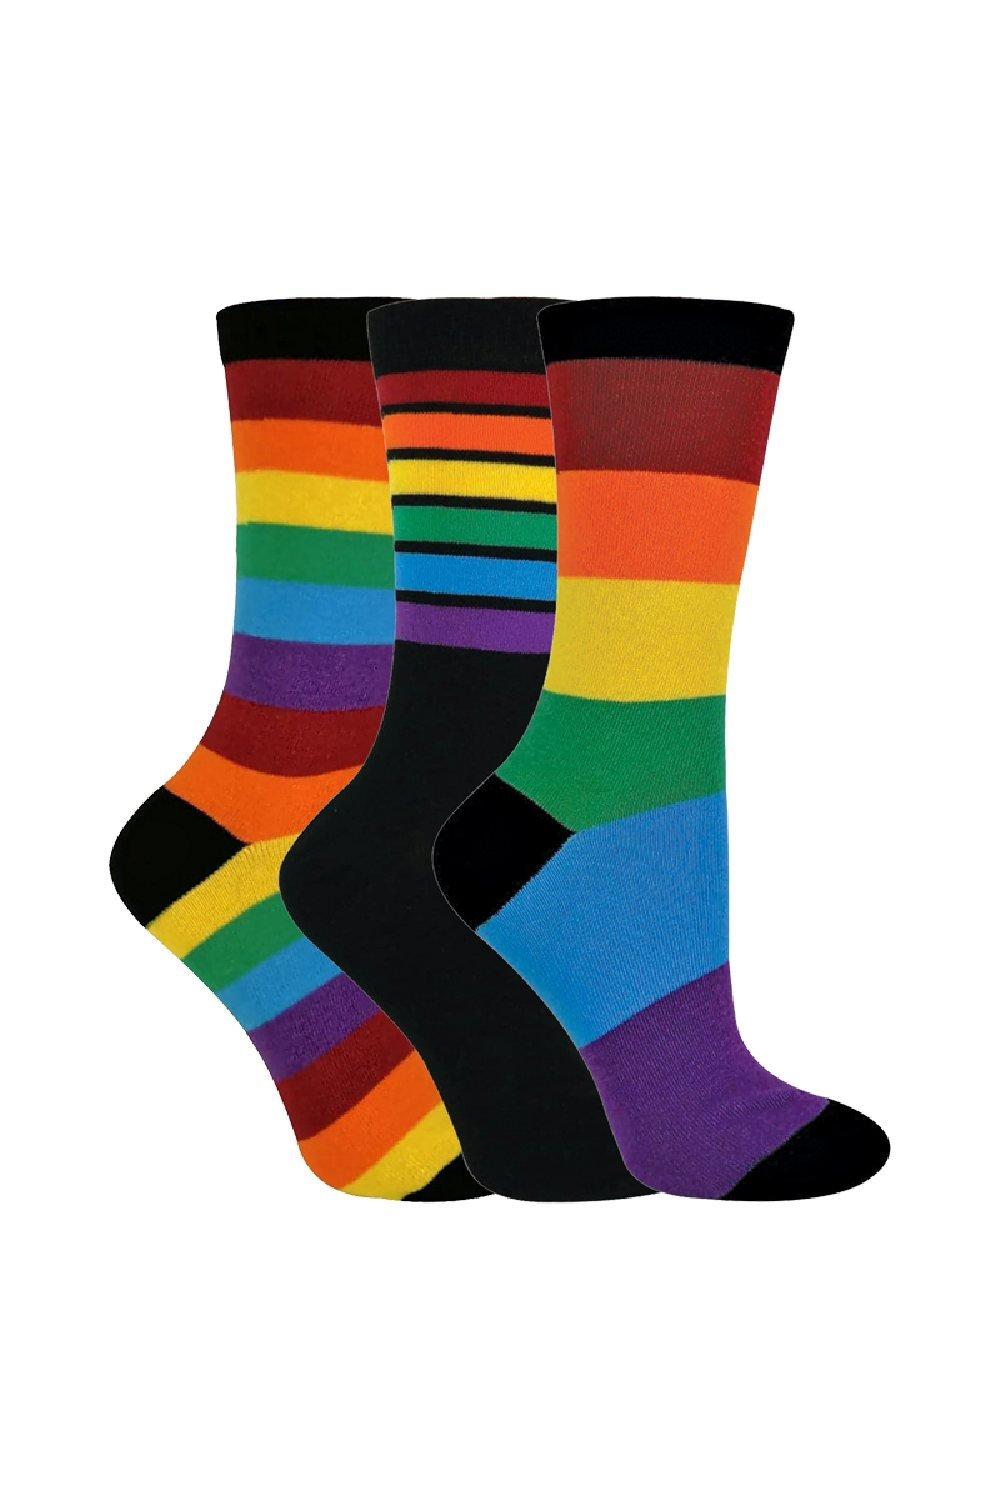 3 Pairs Striped Rainbow Design Casual School Socks